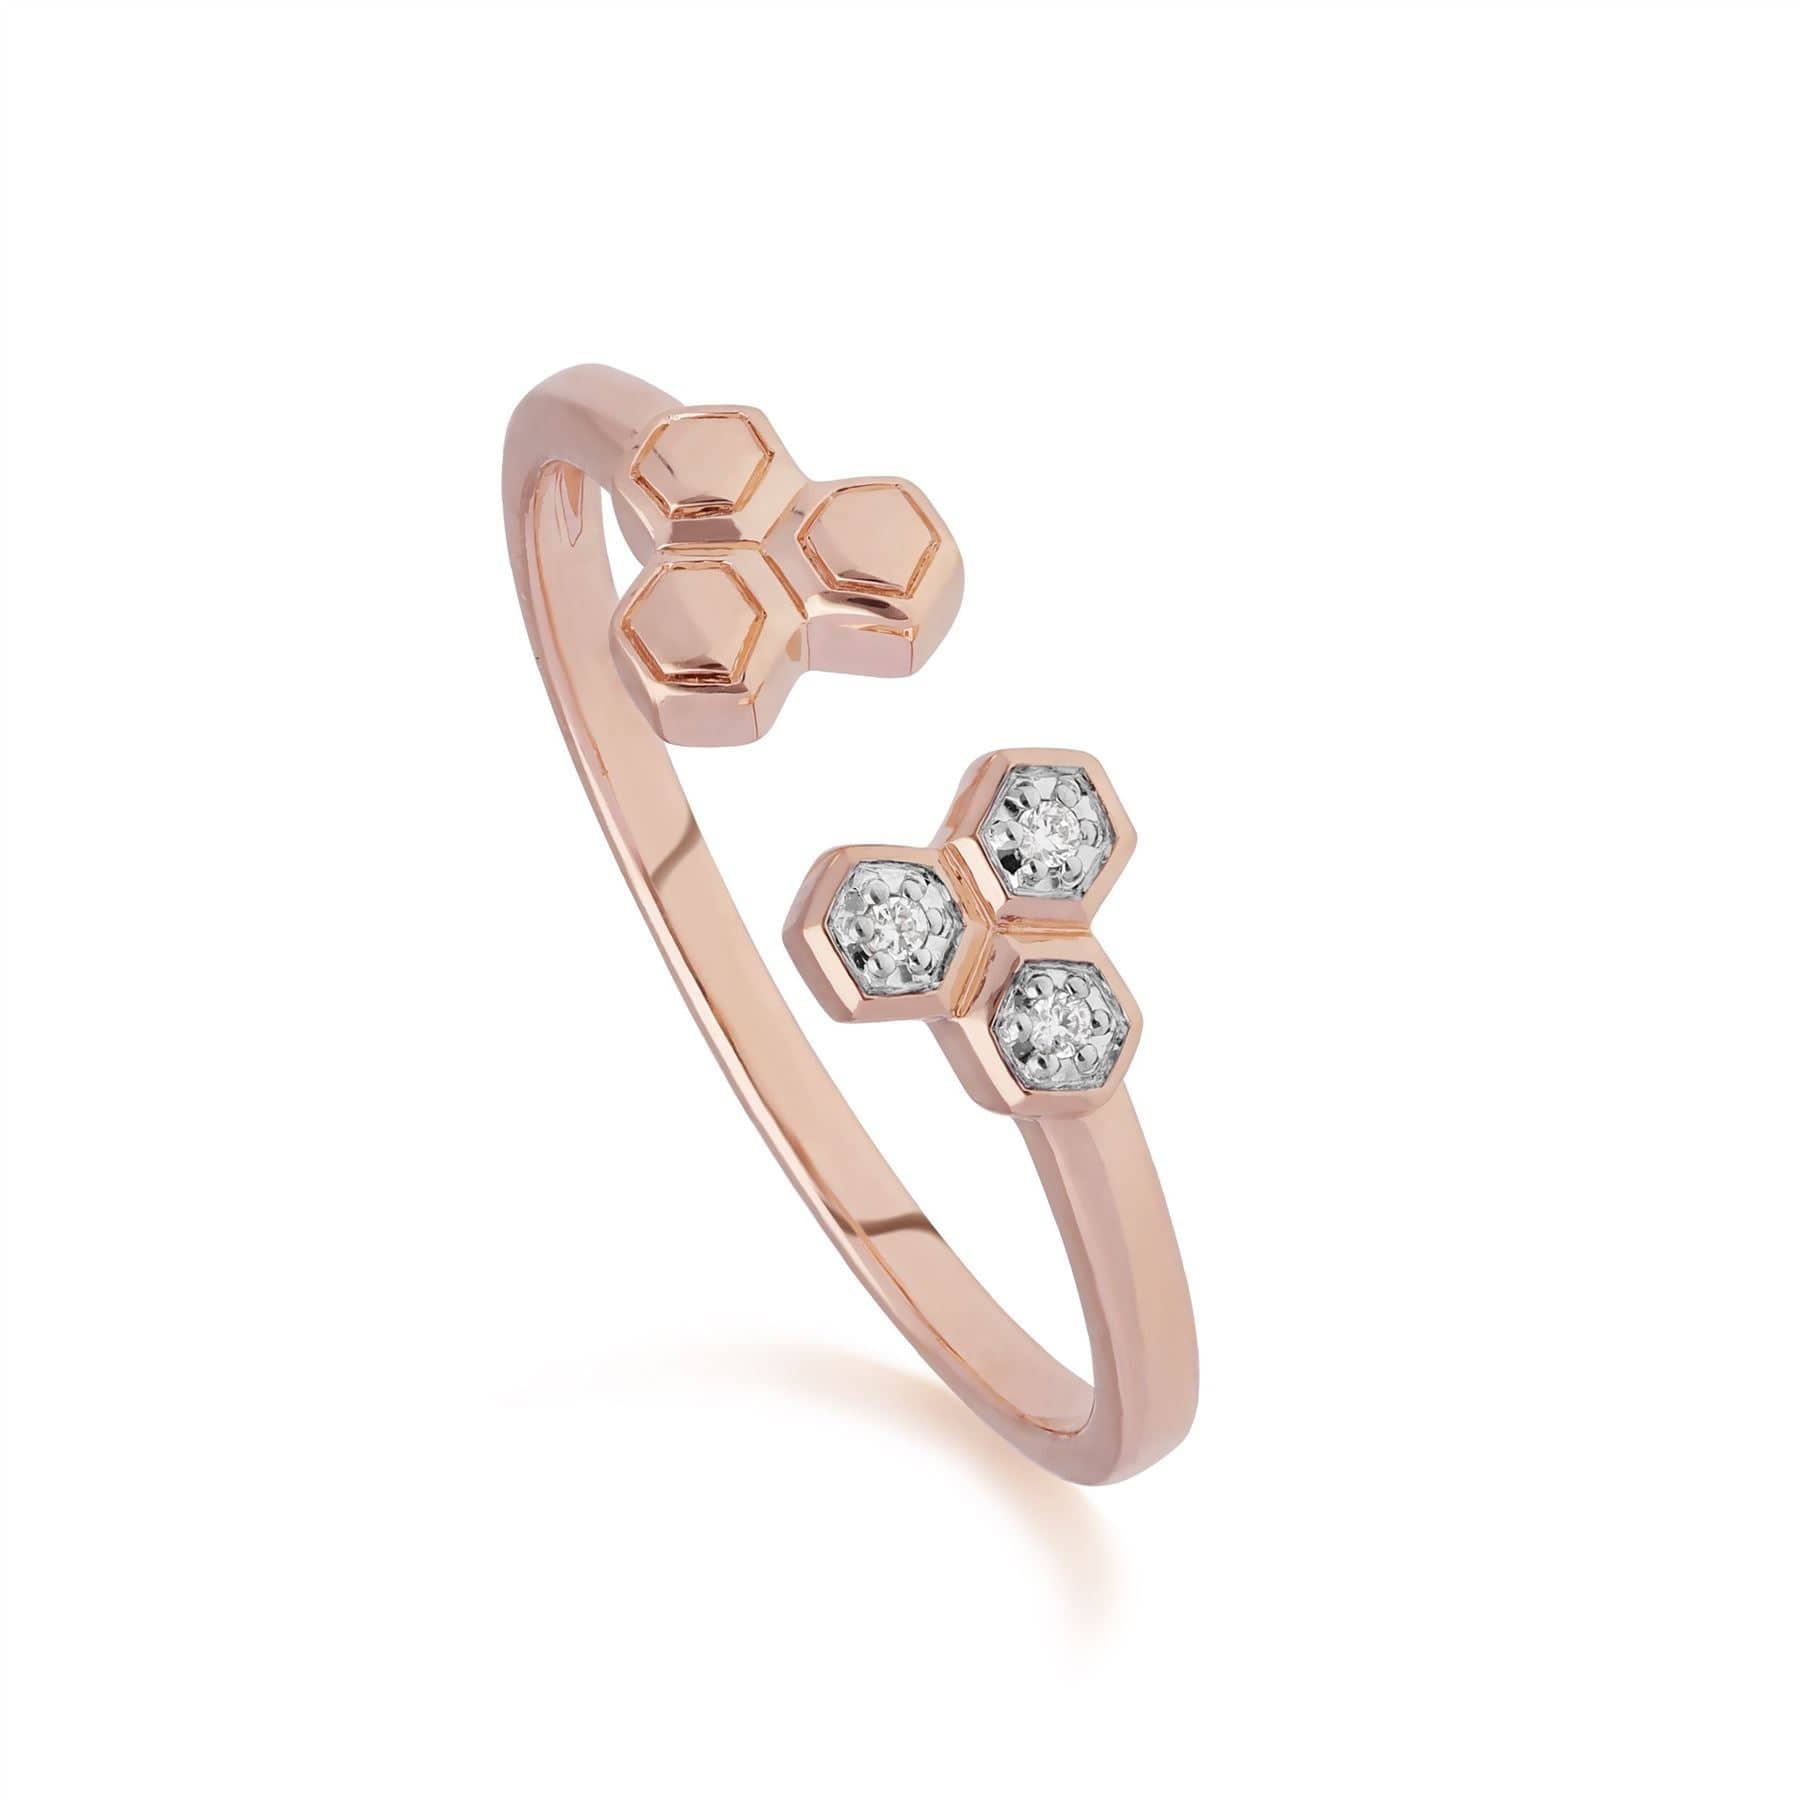 191E0394029-191R0901029 Diamond Trilogy Ring & Stud Earring Set in 9ct Rose Gold 2